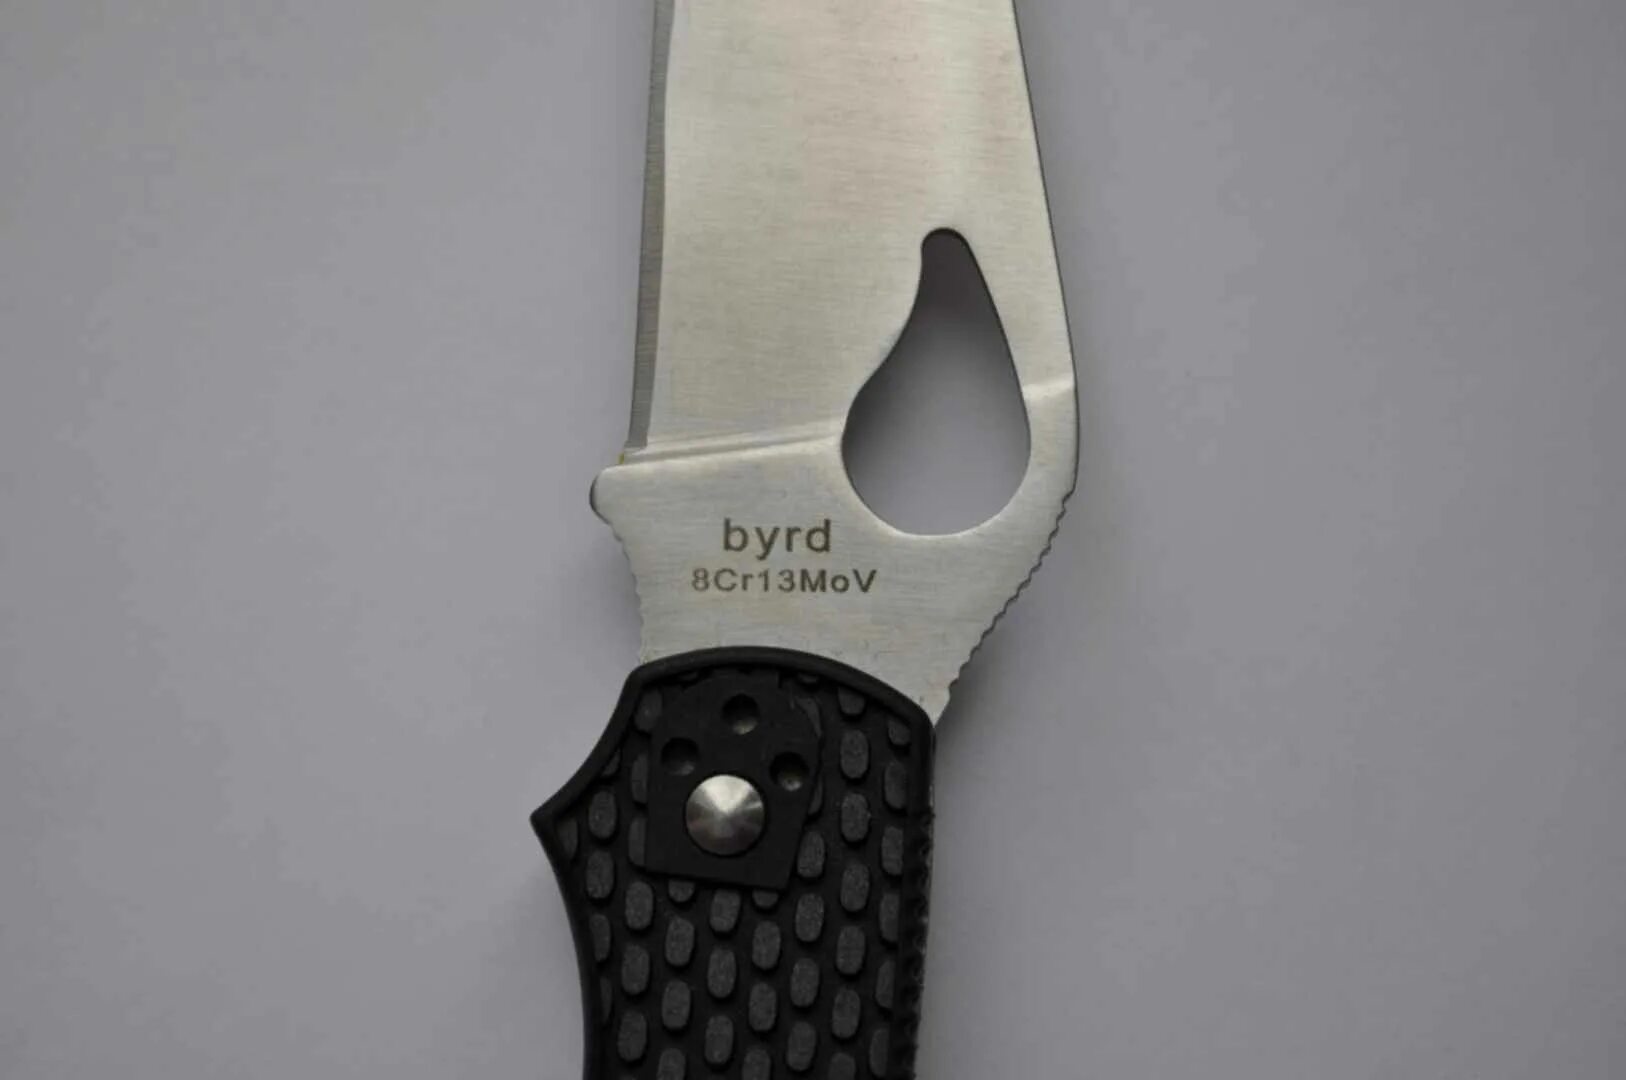 Byrd 8cr13mov. Byrd cara cara 2 Emerson vs Spyderco Endura 4. Нож Byrd 8cr13mov ченный метал. Накладки Spyderco Endura из рога.